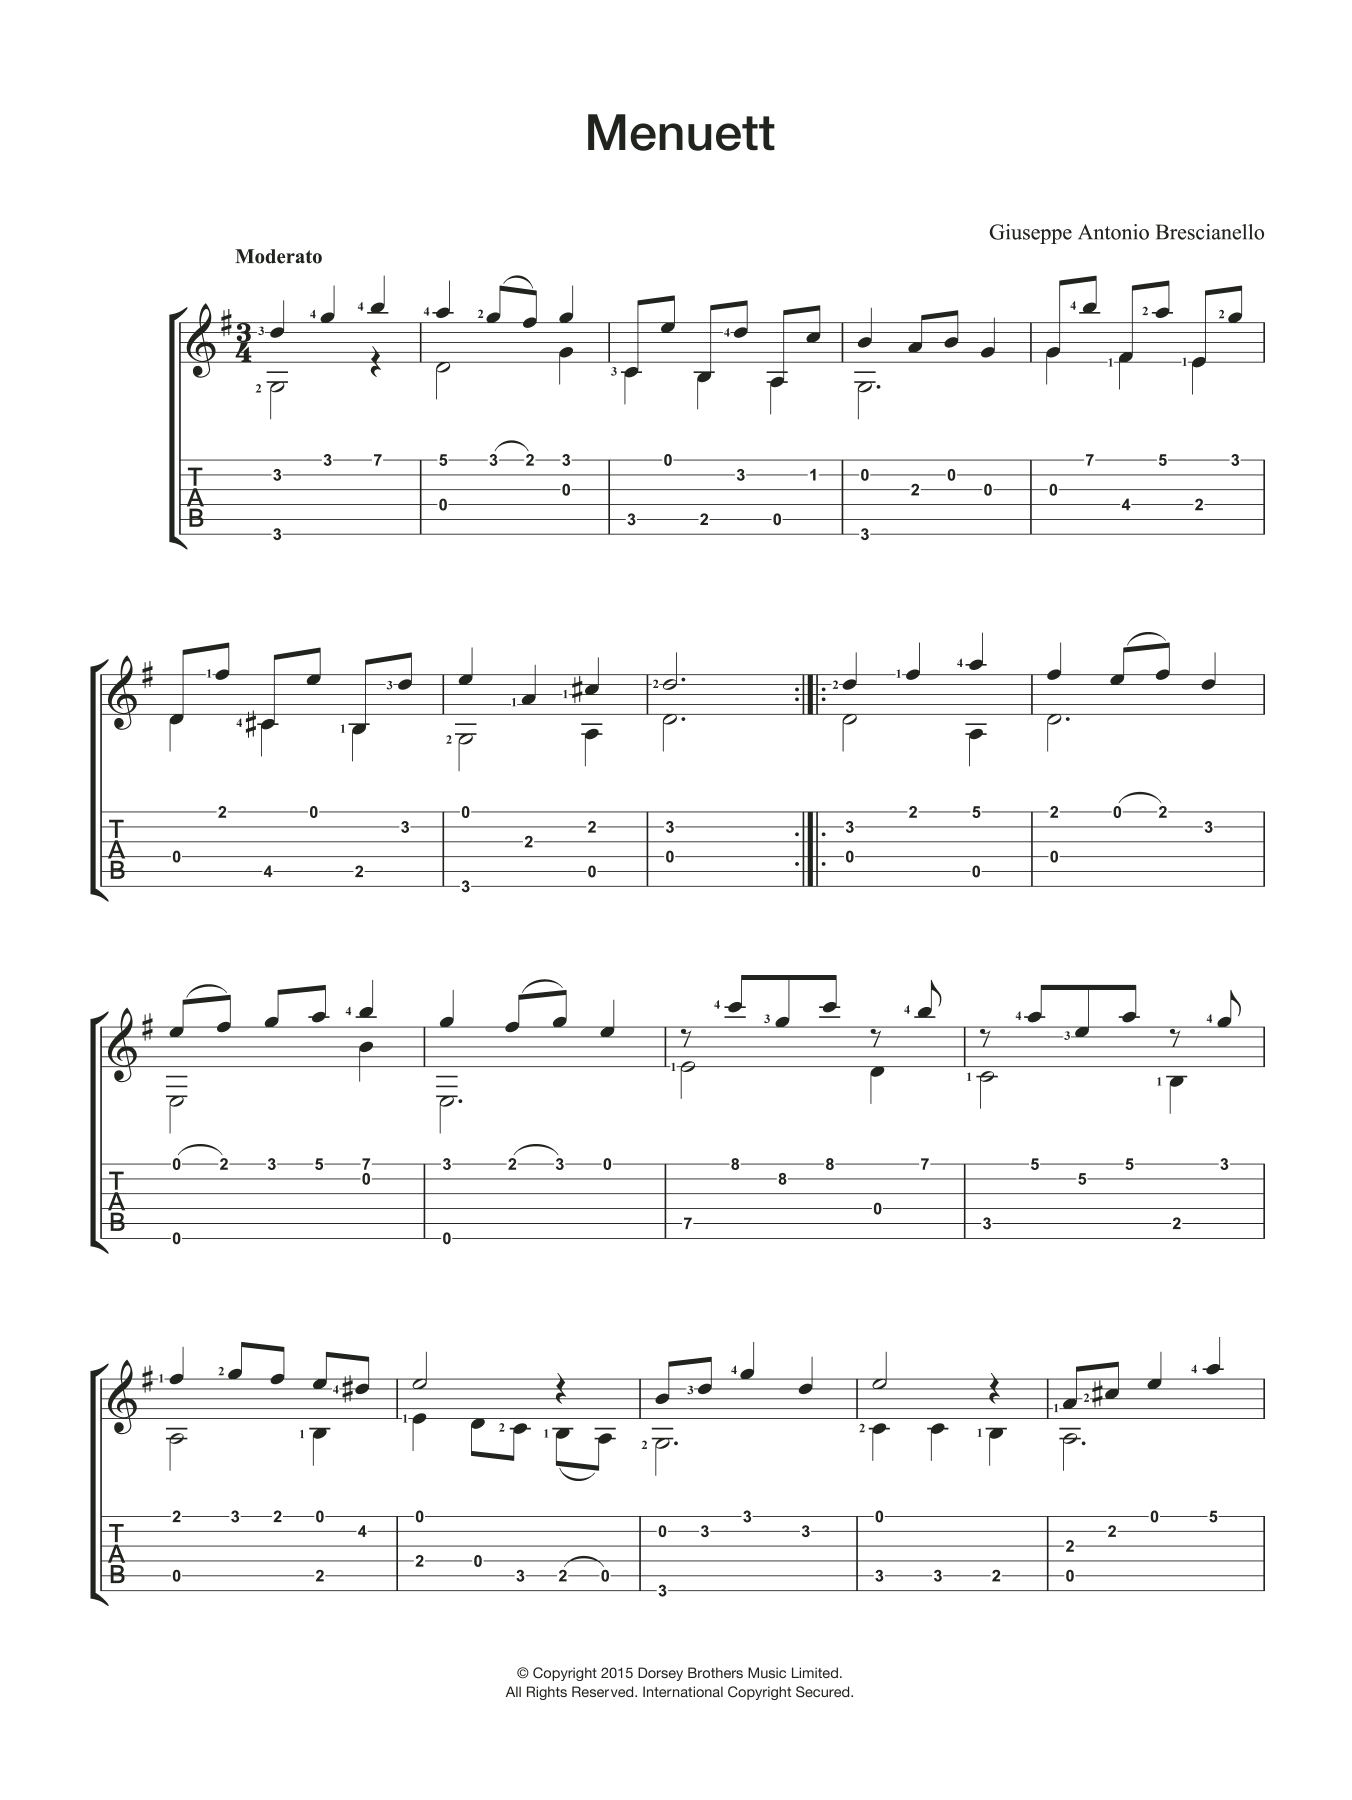 Giuseppe Antonio Brescianello Menuett Sheet Music Notes & Chords for Guitar - Download or Print PDF